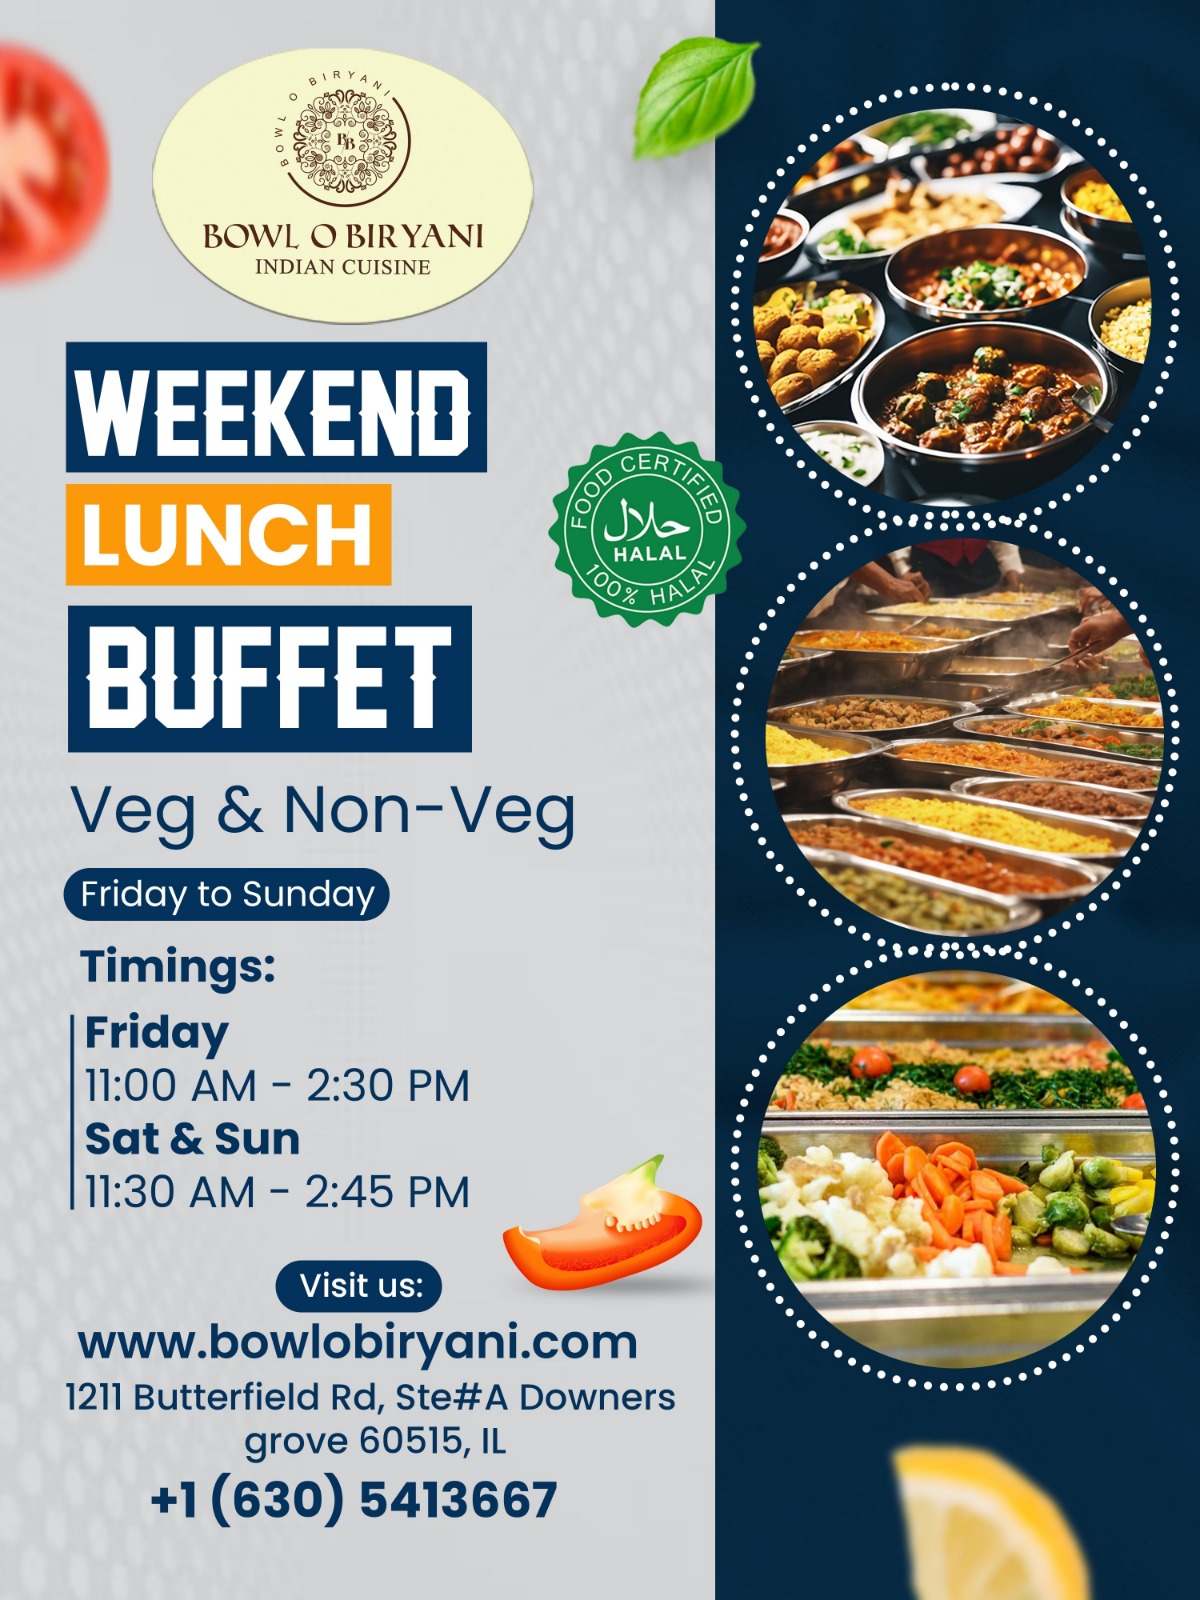 Enjoy our Weekend Lunch Buffet featuring both Veg and Non-Veg options!